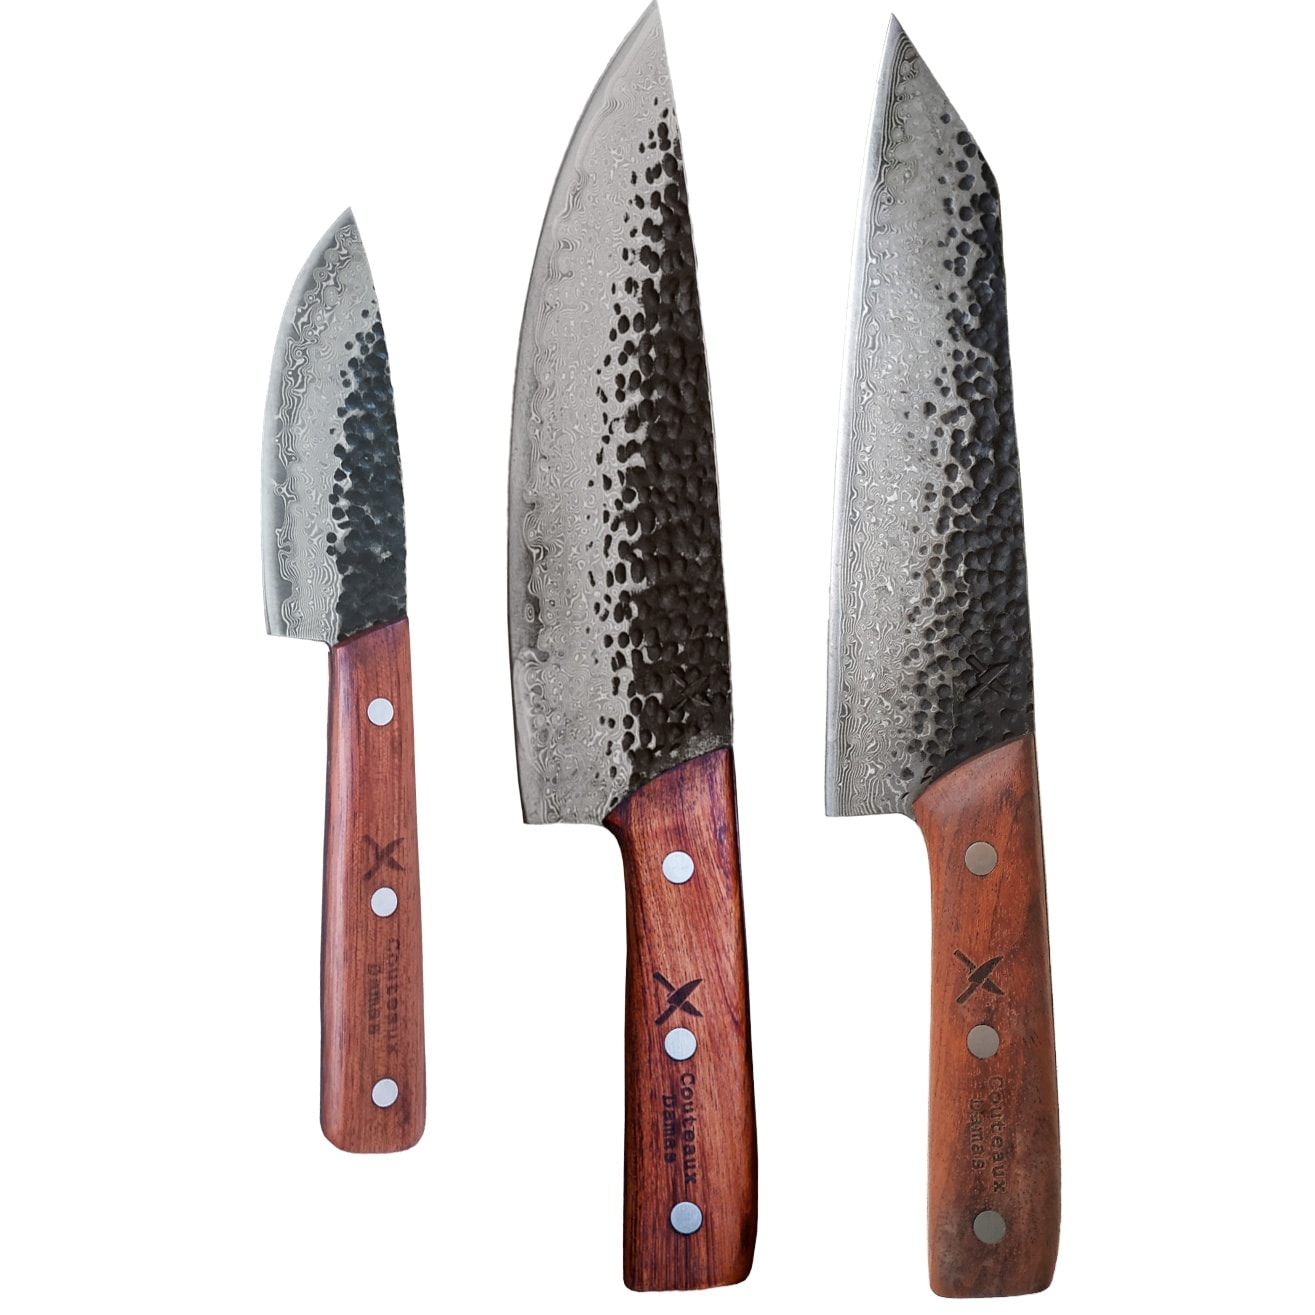 https://damas-knives.com/wp-content/uploads/2021/03/3-pattern-welded-chef-set-1.jpg